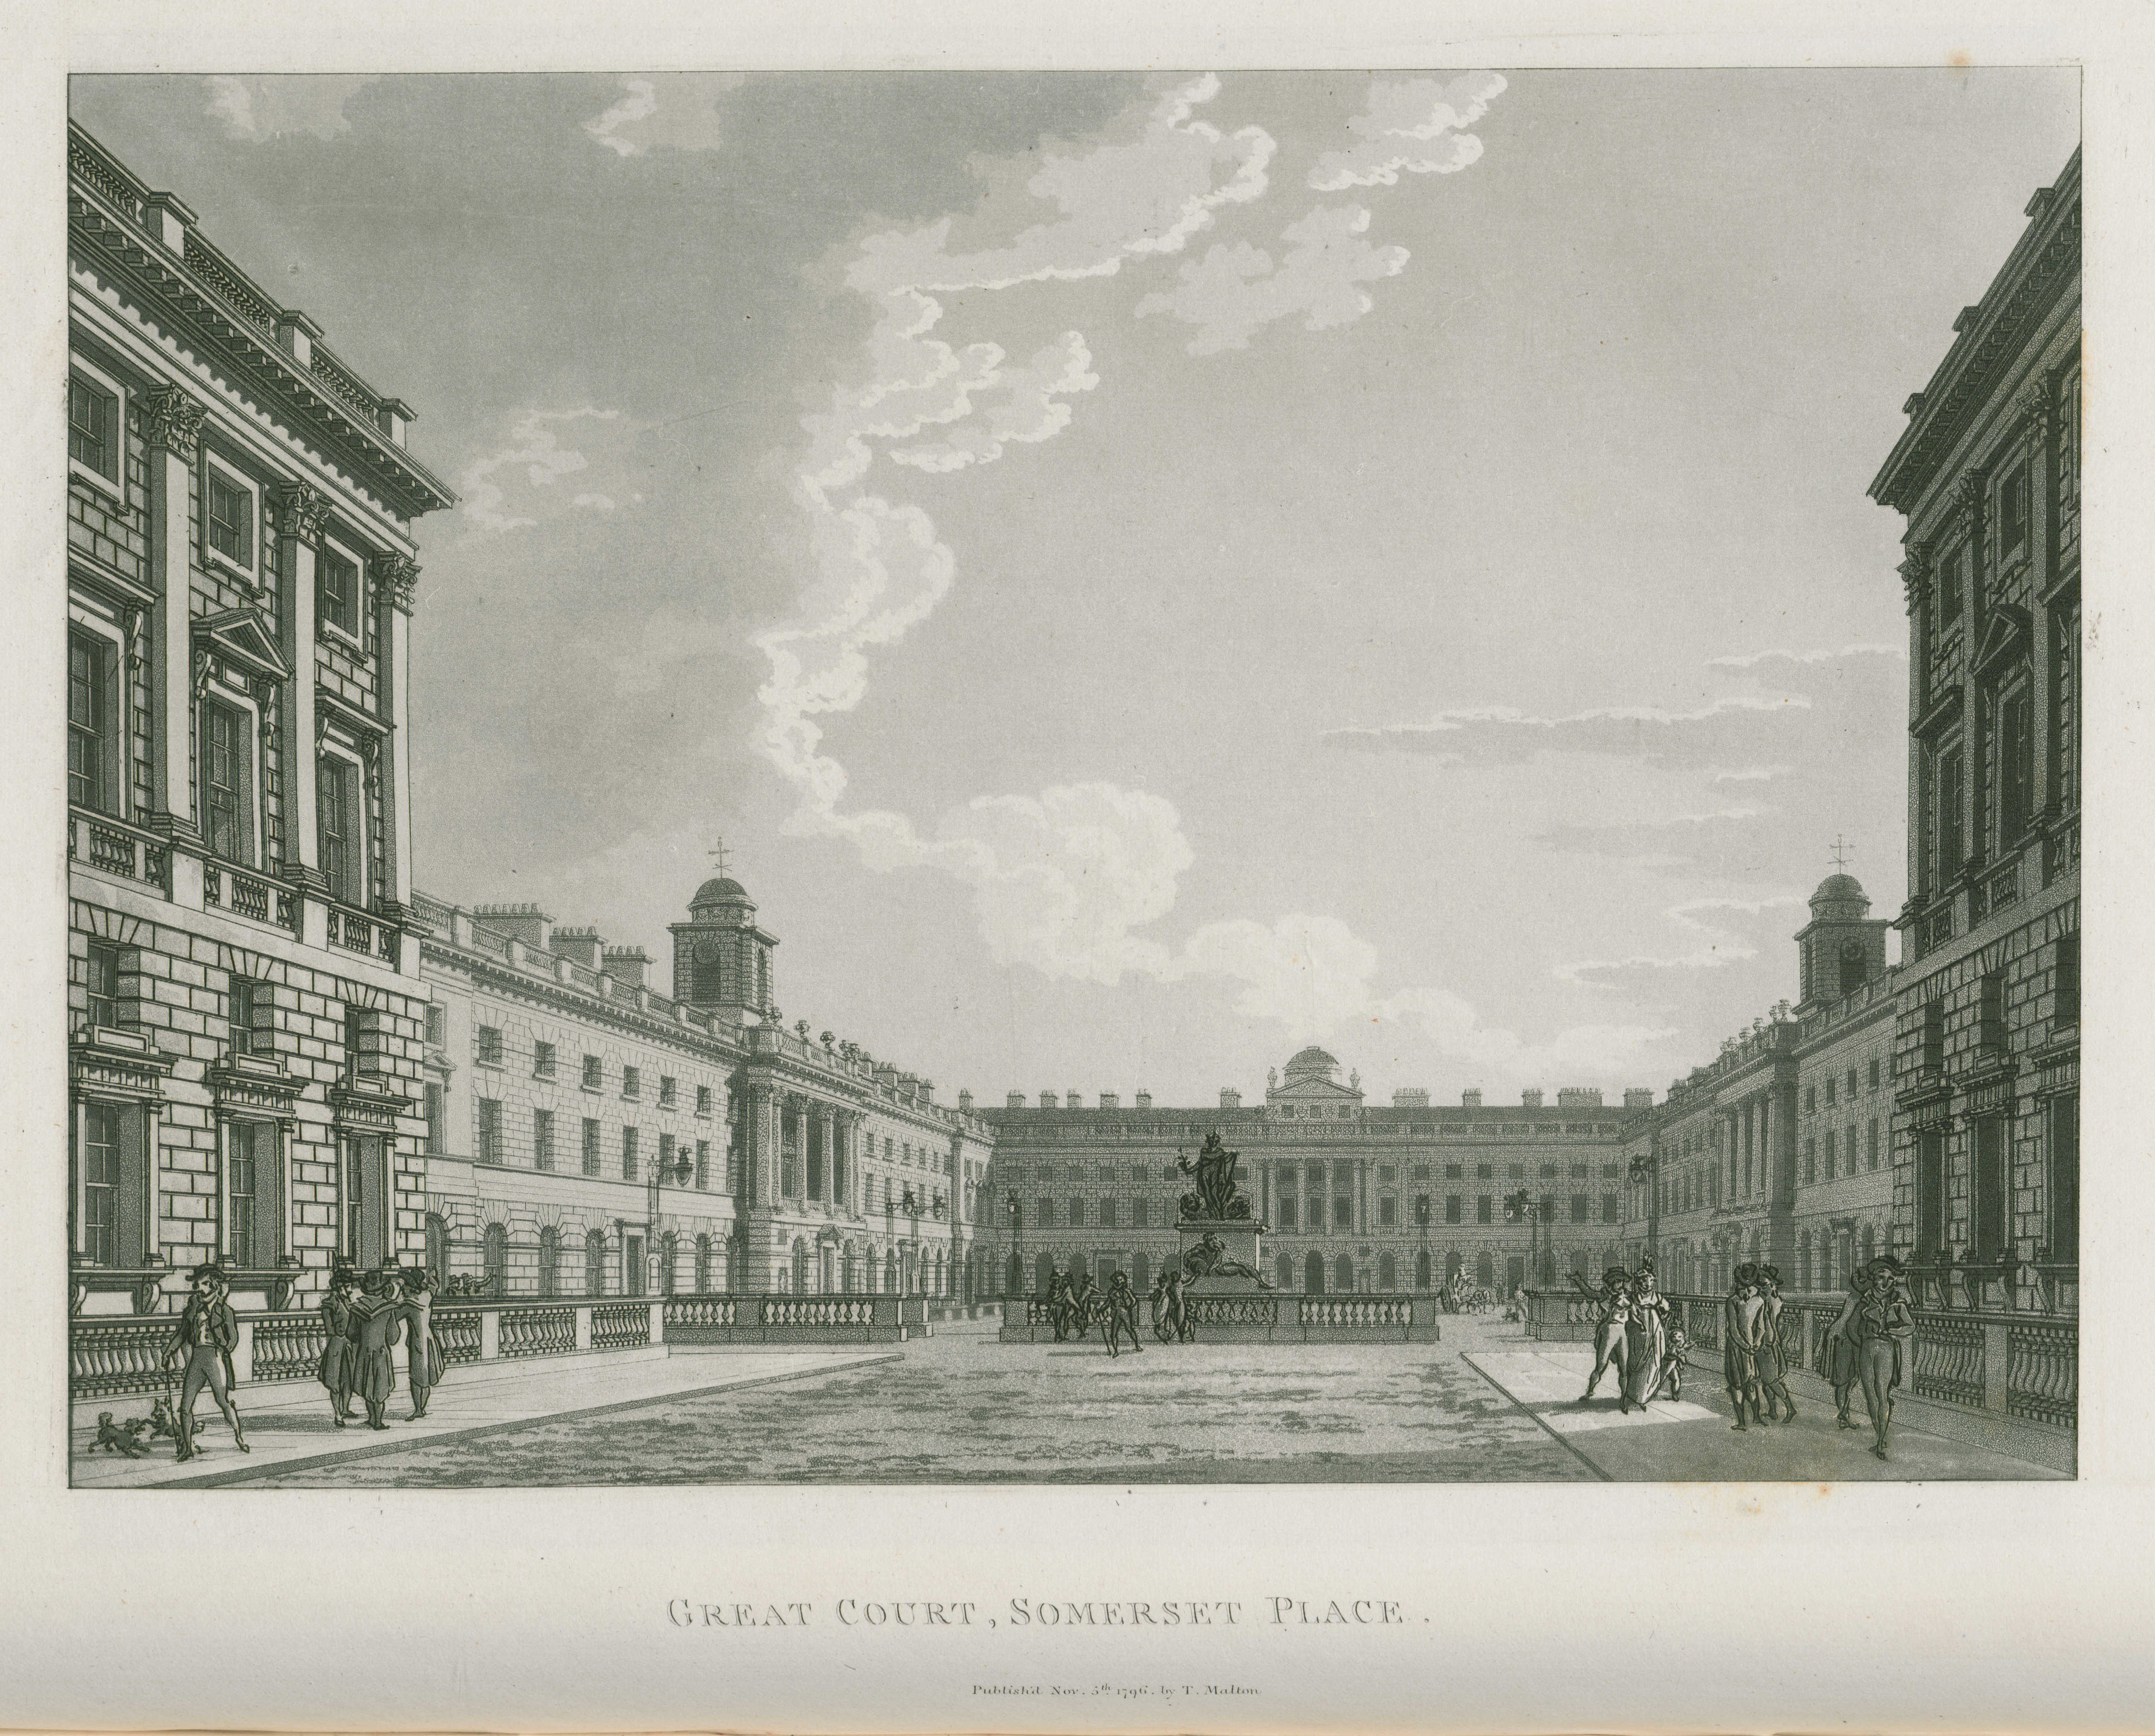 038 - Malton - Great Court, Somerset Place